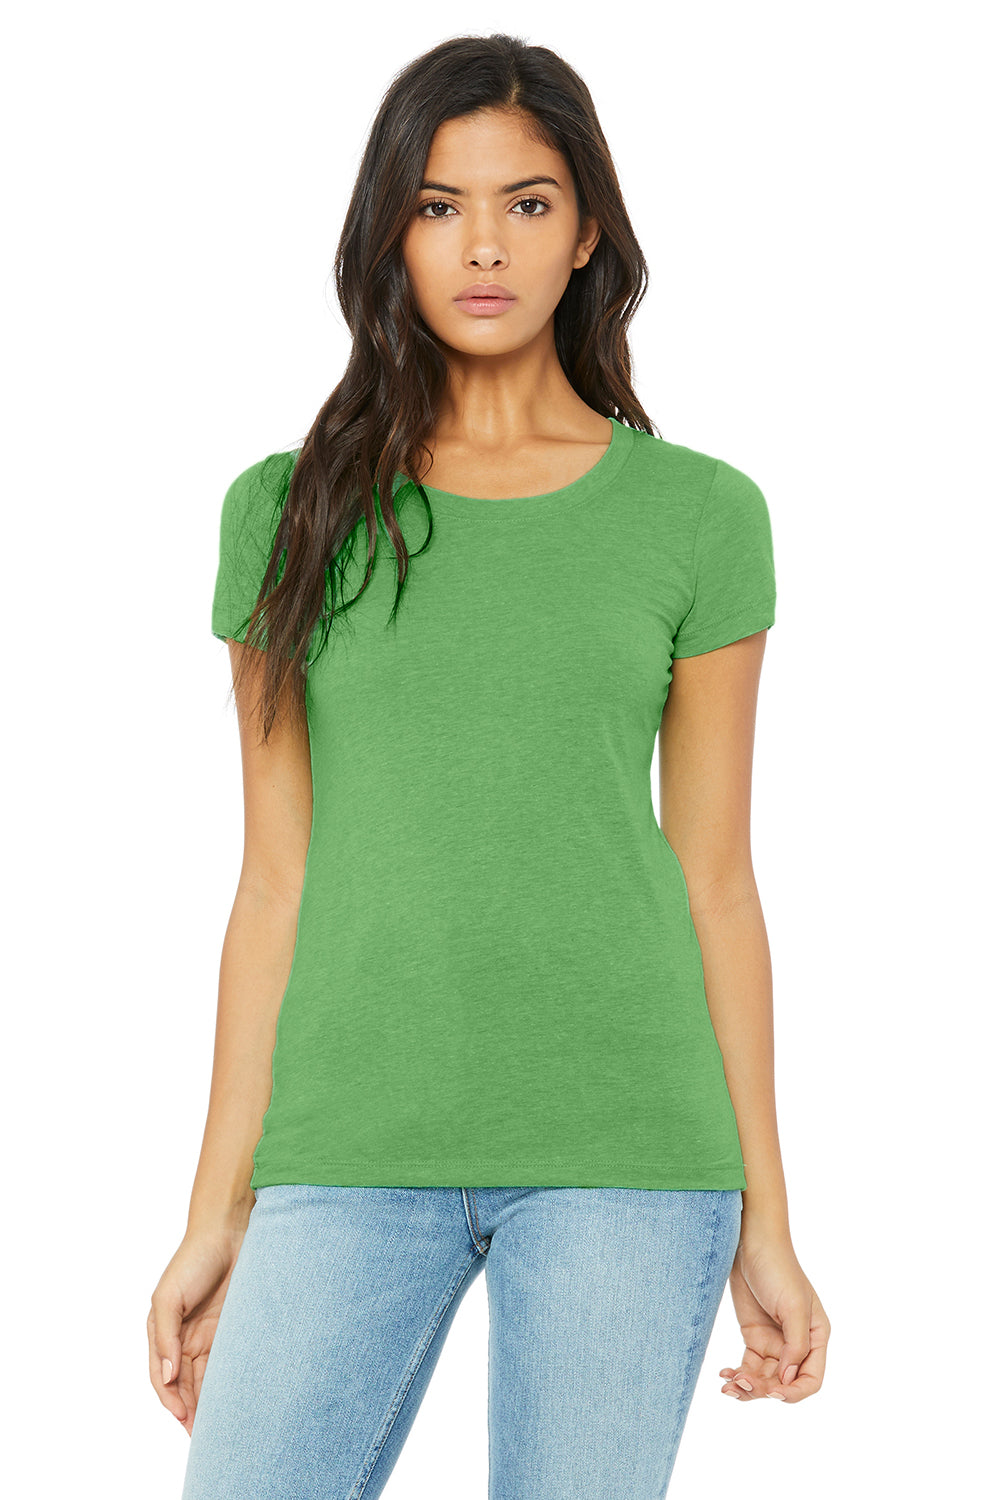 Bella + Canvas B8413 Womens Short Sleeve Crewneck T-Shirt Green Front